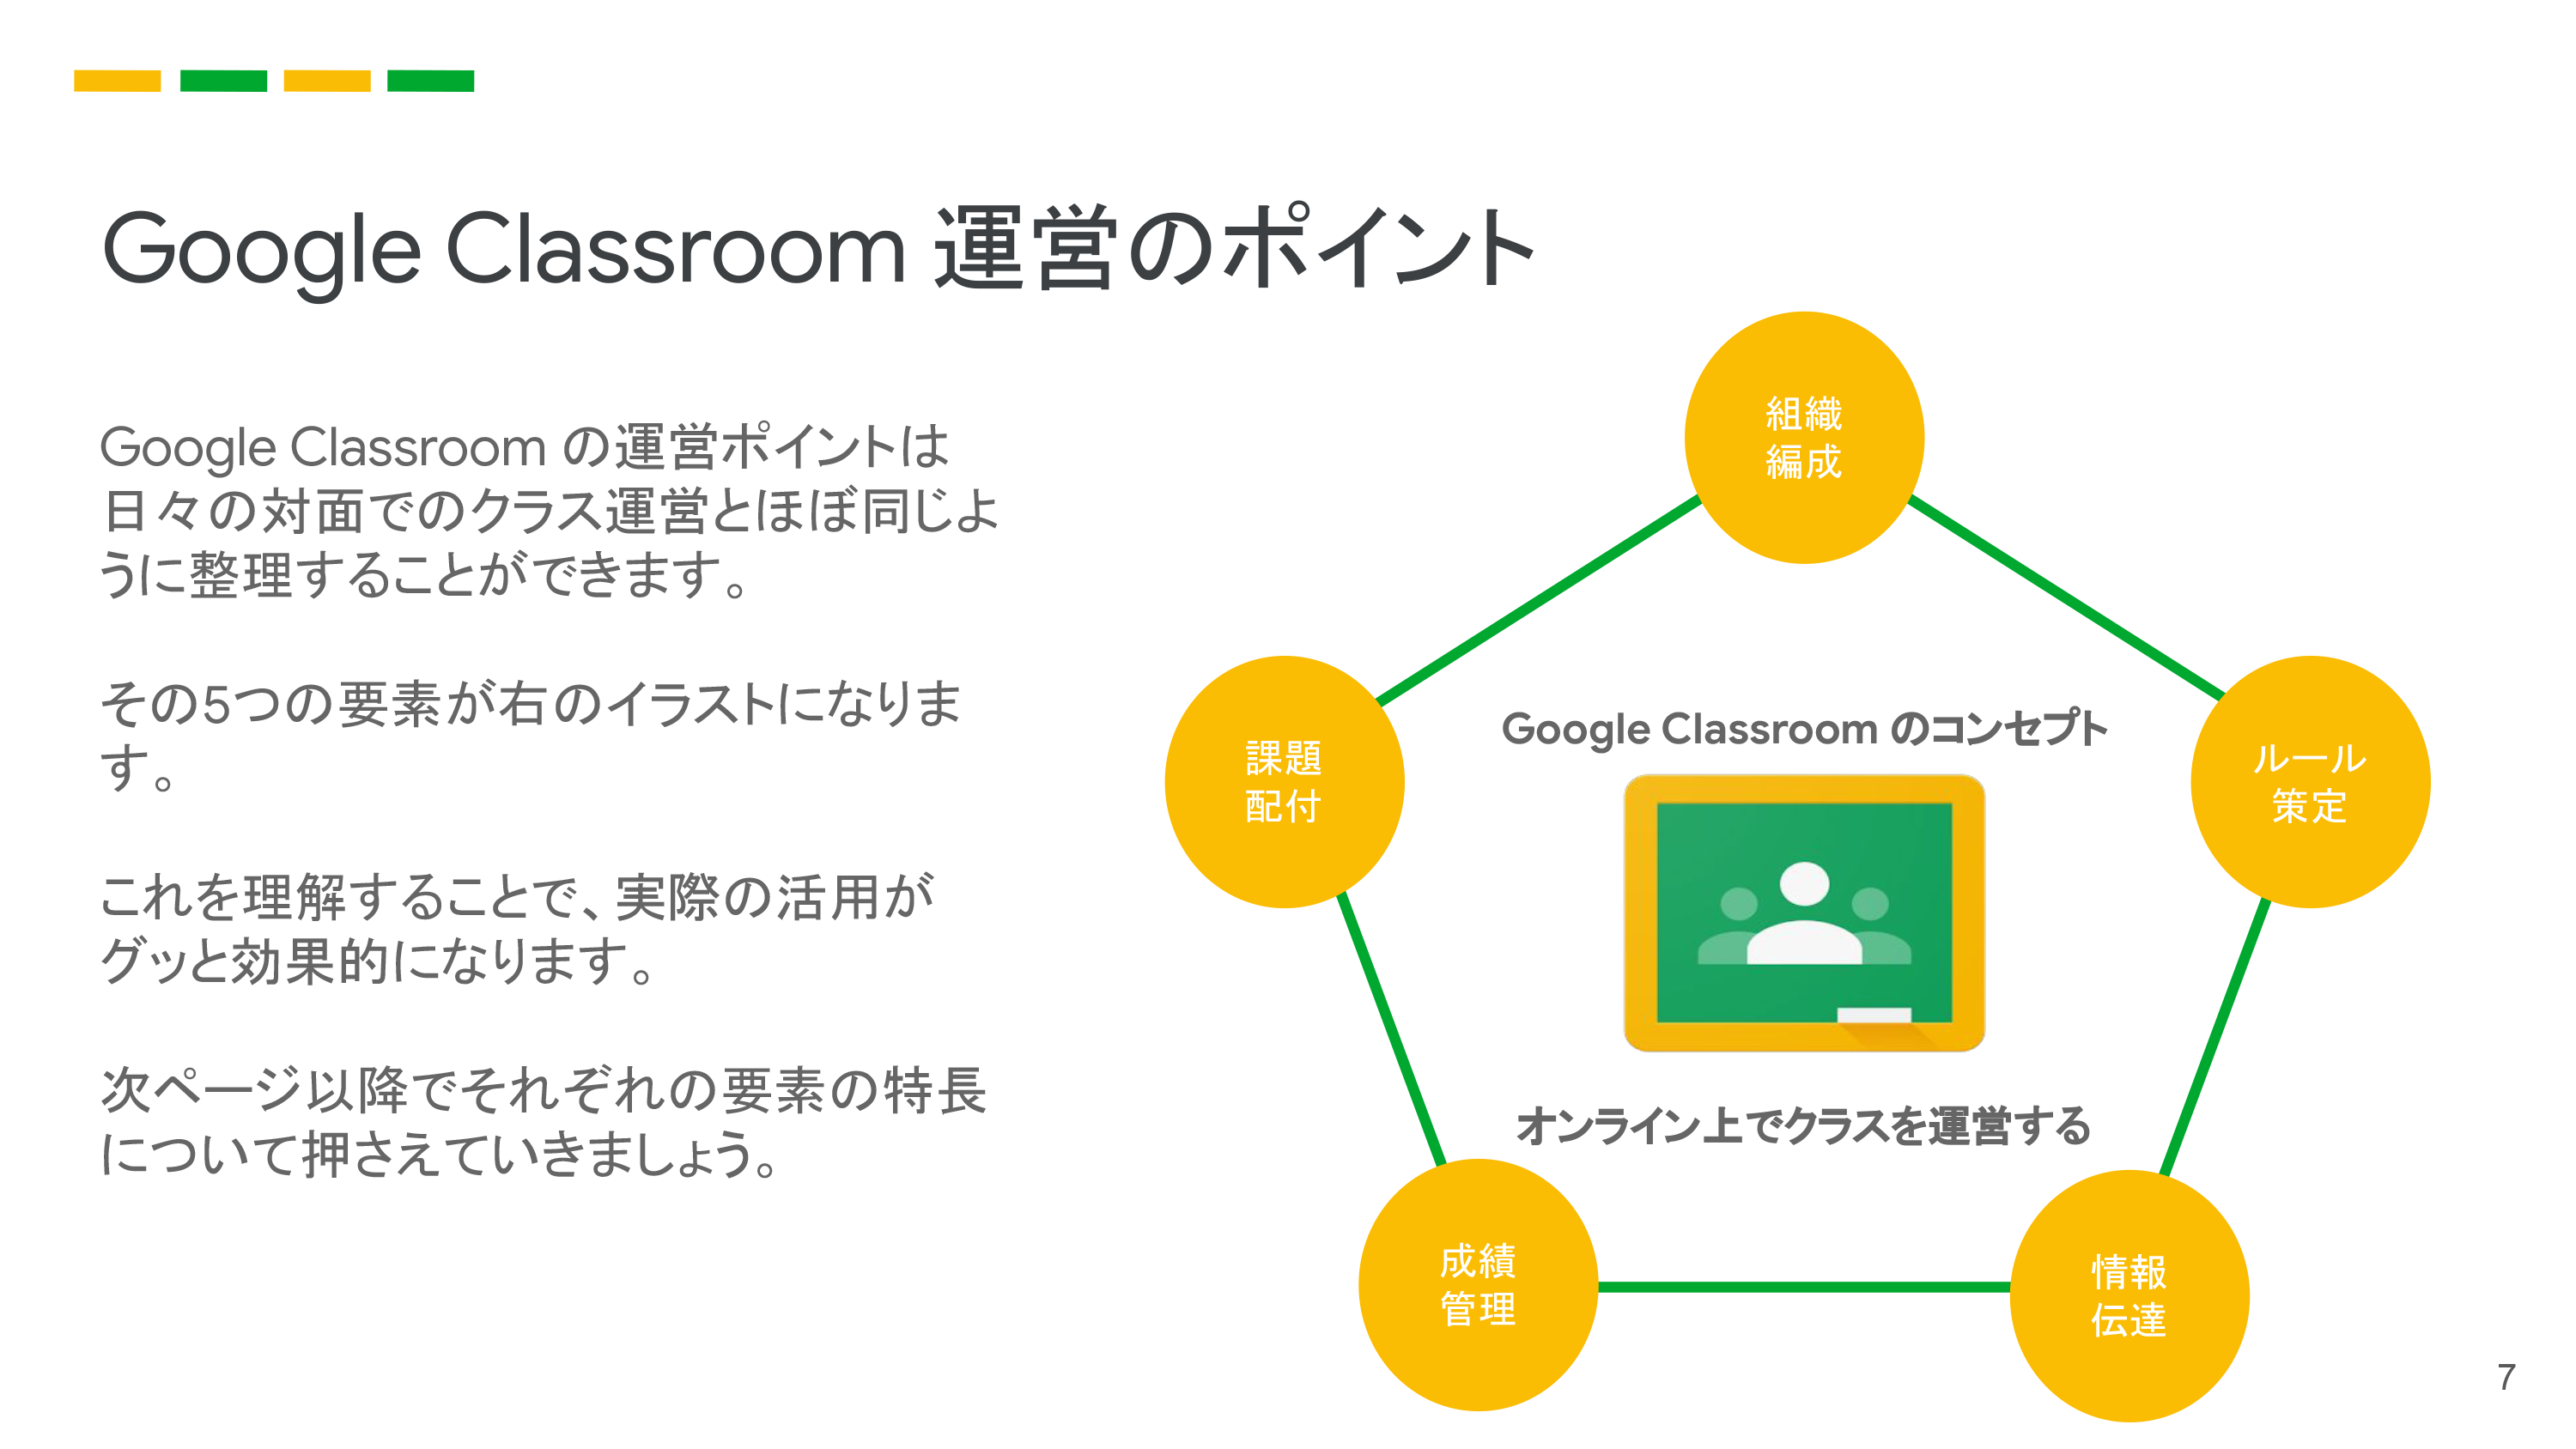 Google Classroom を円滑に運営するための4つのポイント7